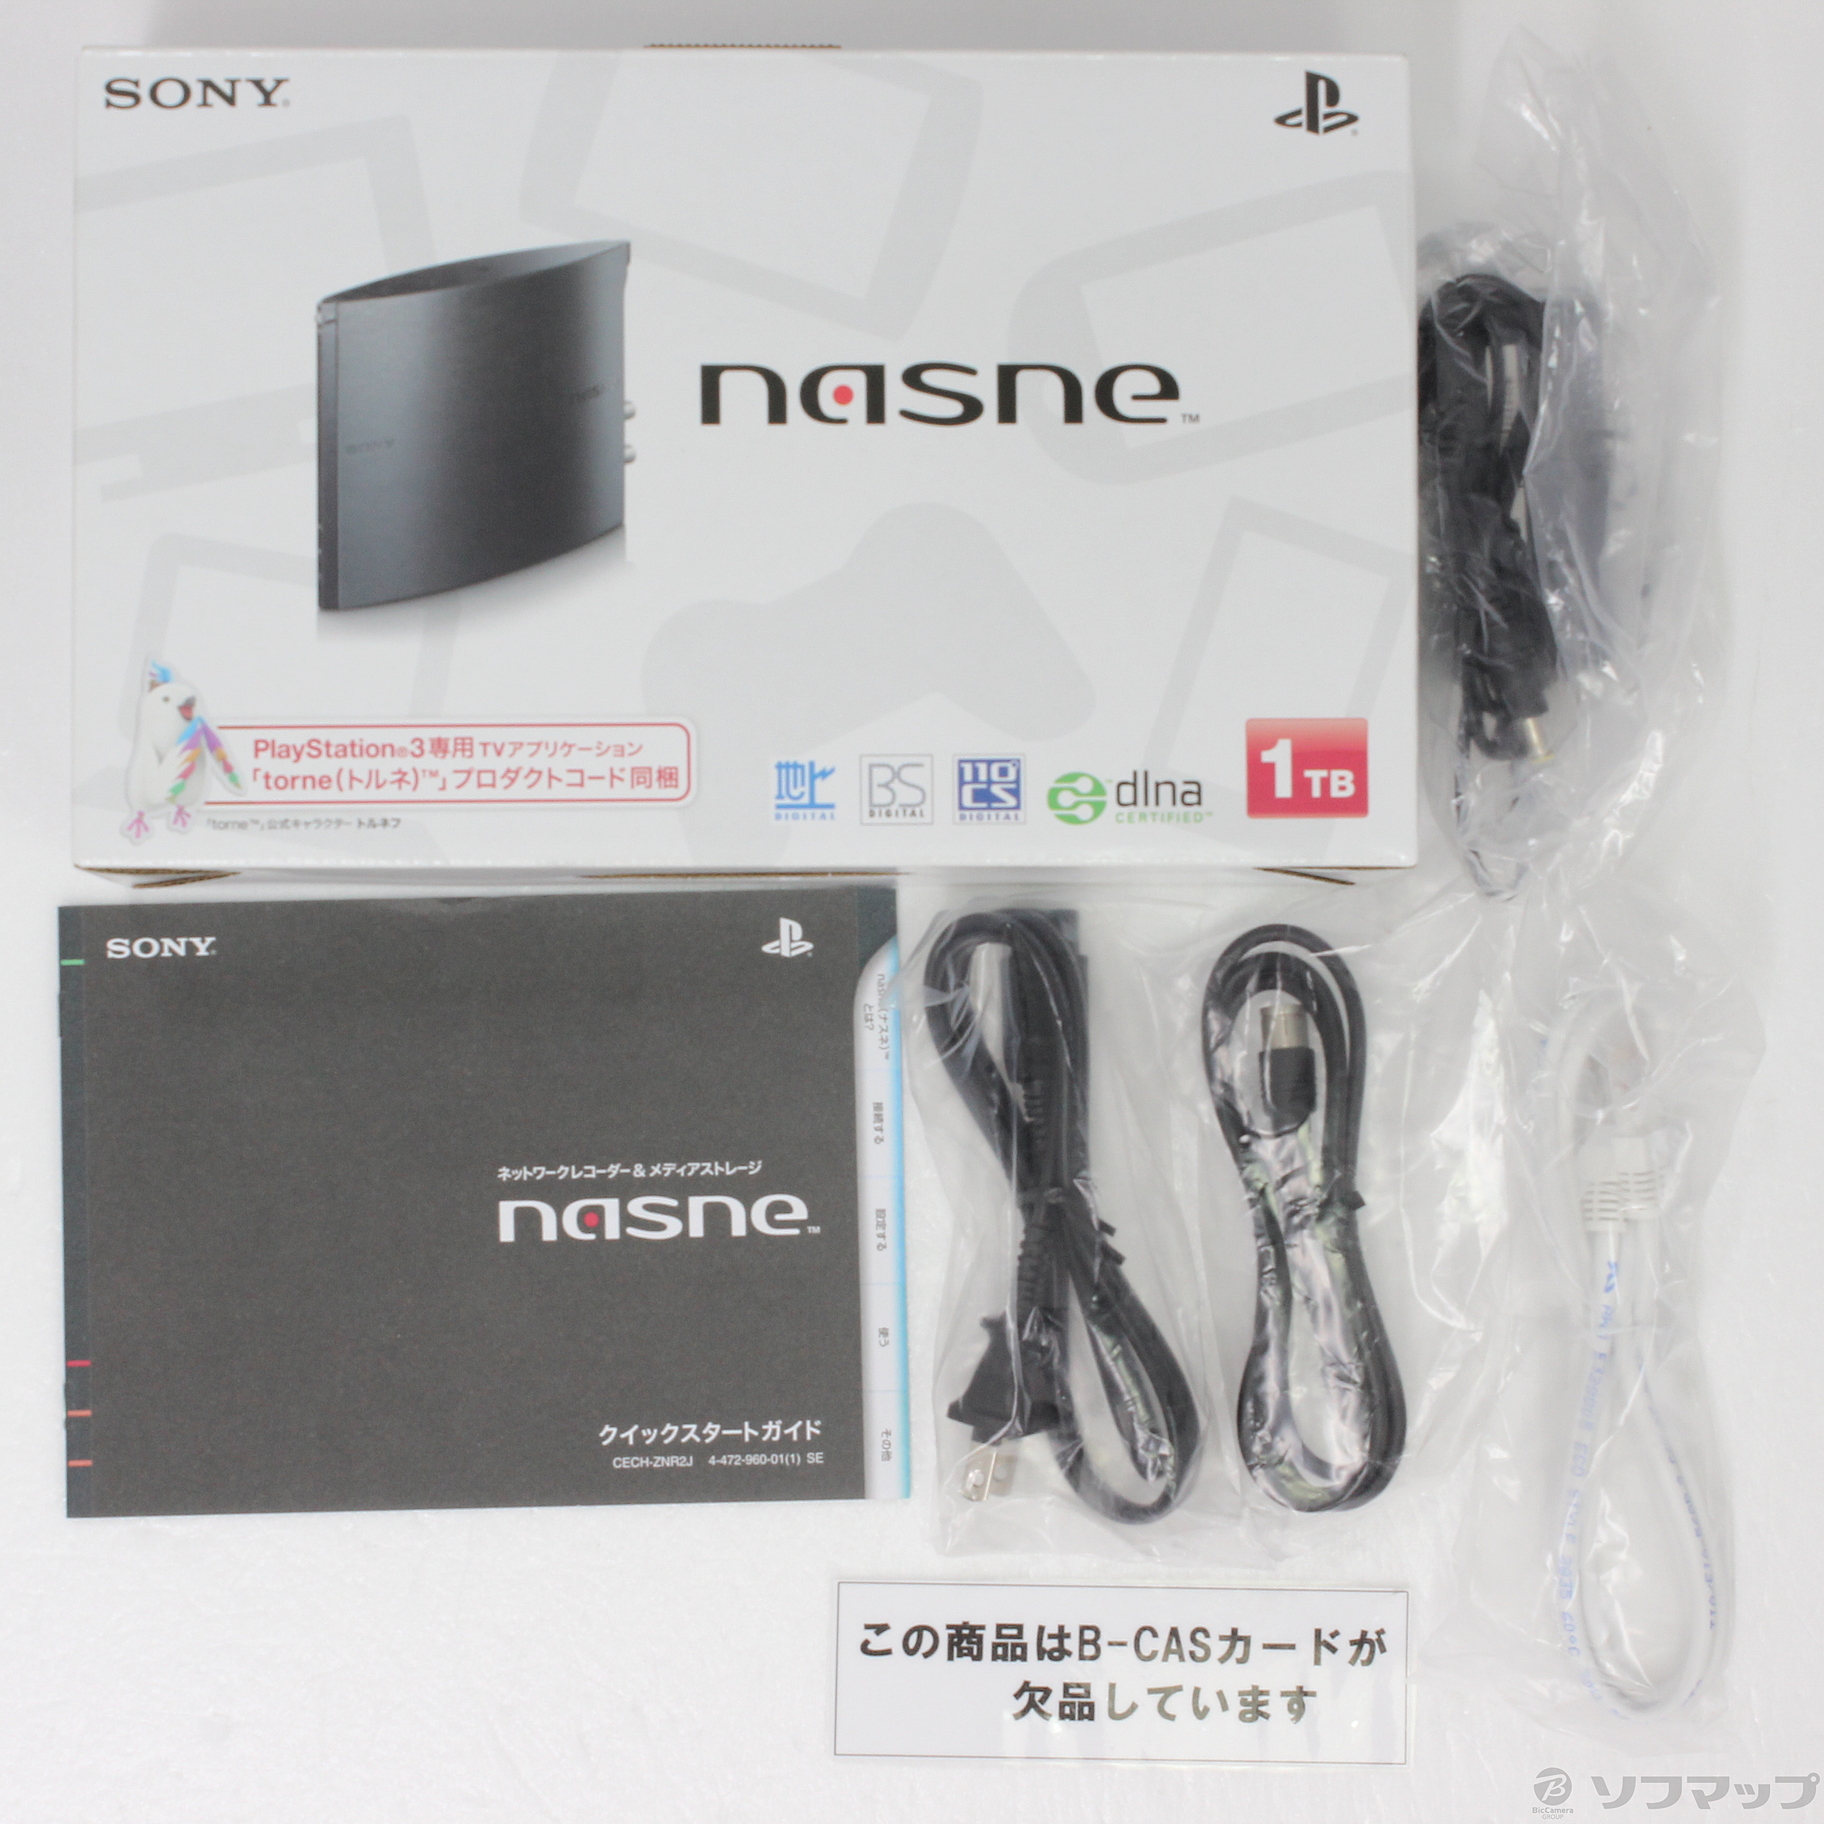 nasne 1TBモデル (CUHJ-15004) SONY ソニー PS4